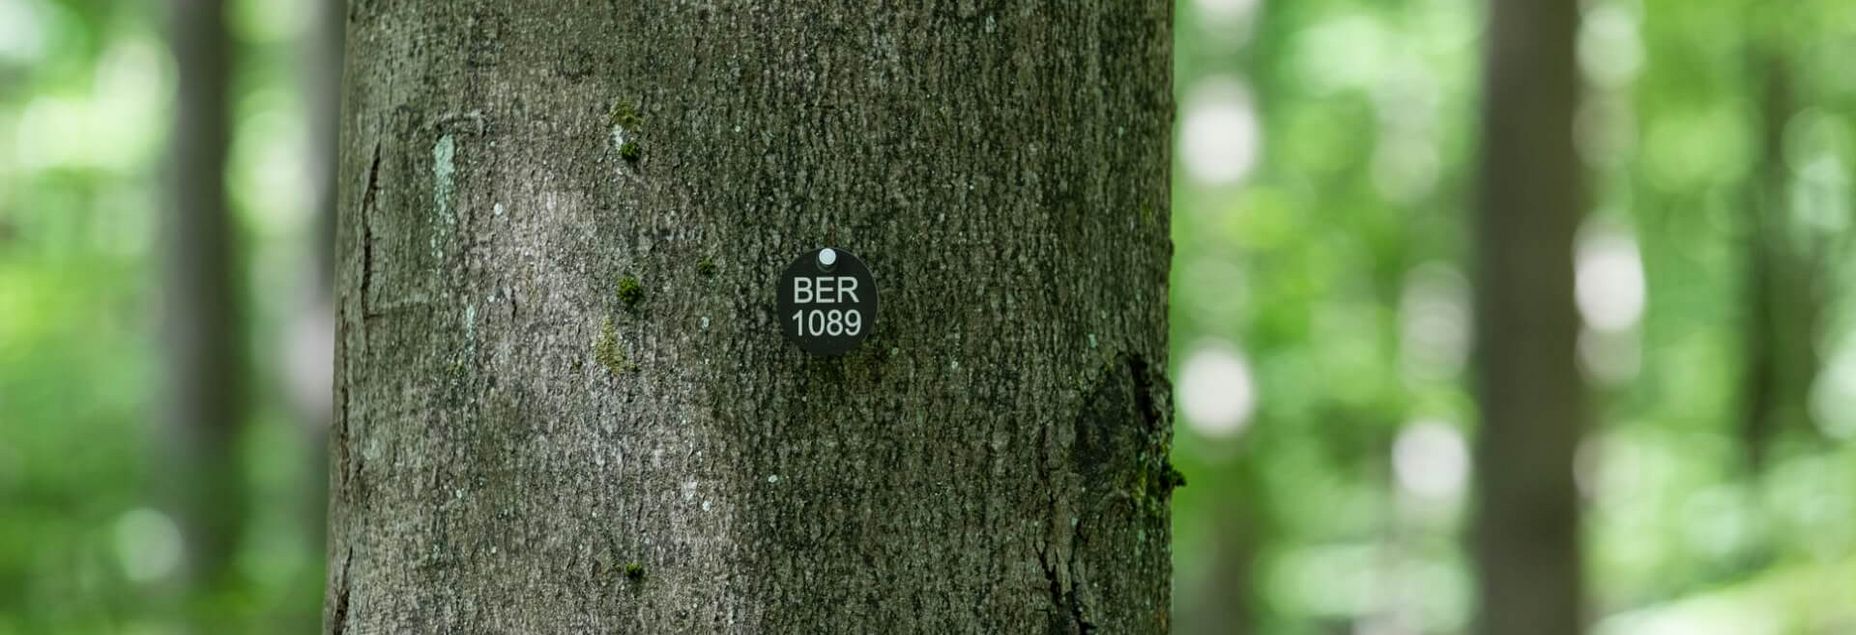 Baum BER 1089 - Plakette